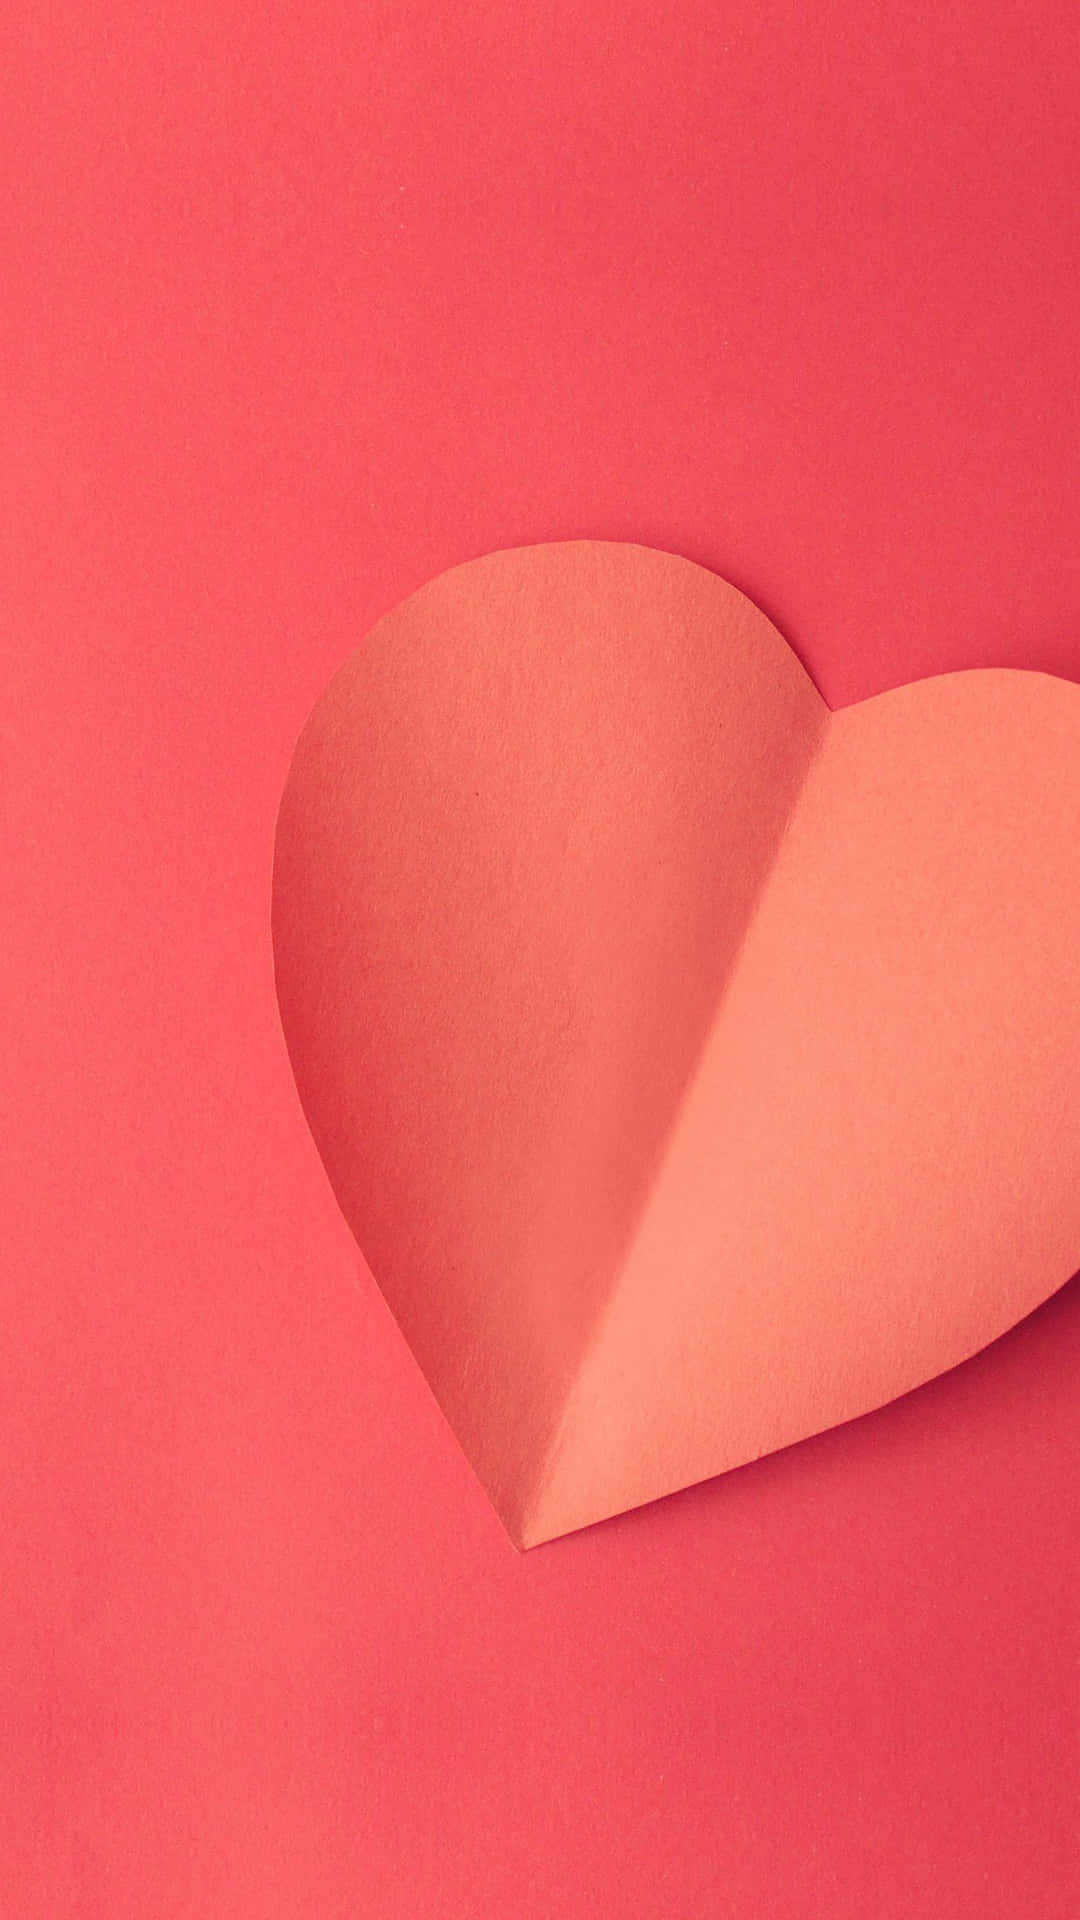 Paper Fold Pink Heart Iphone Wallpaper